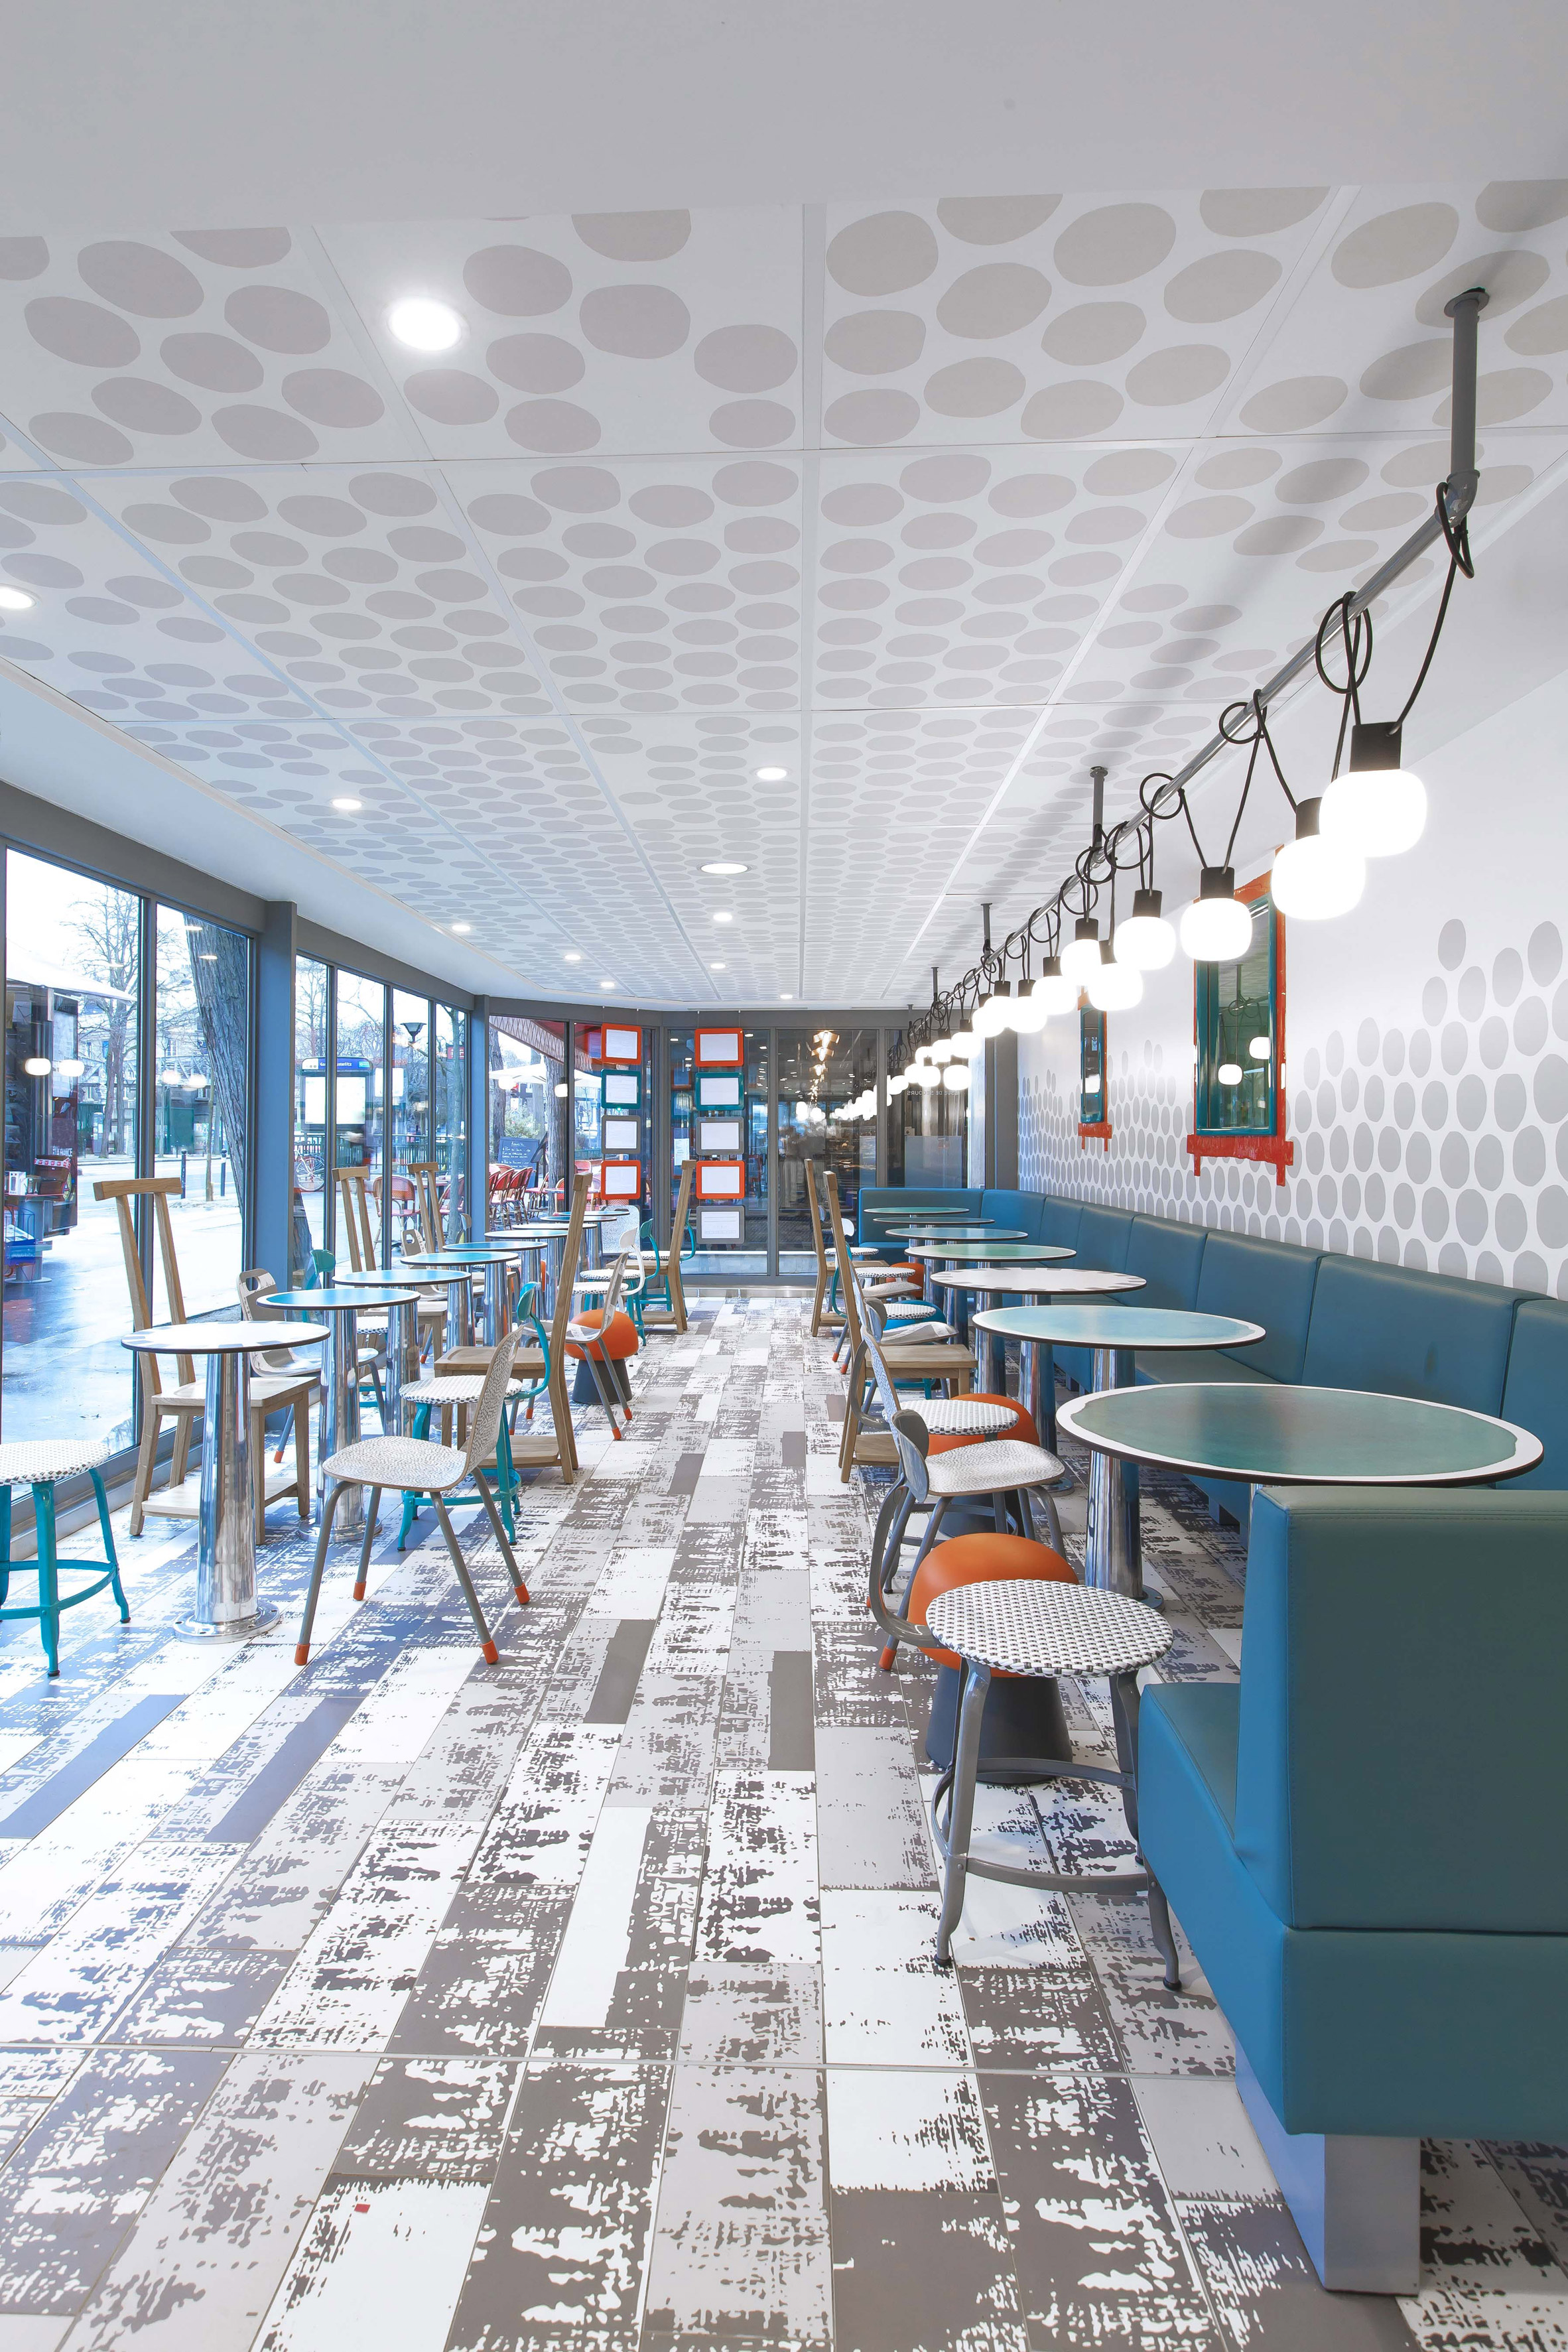 Interiors of McDonald's Austerlitz designed by Paola Navone